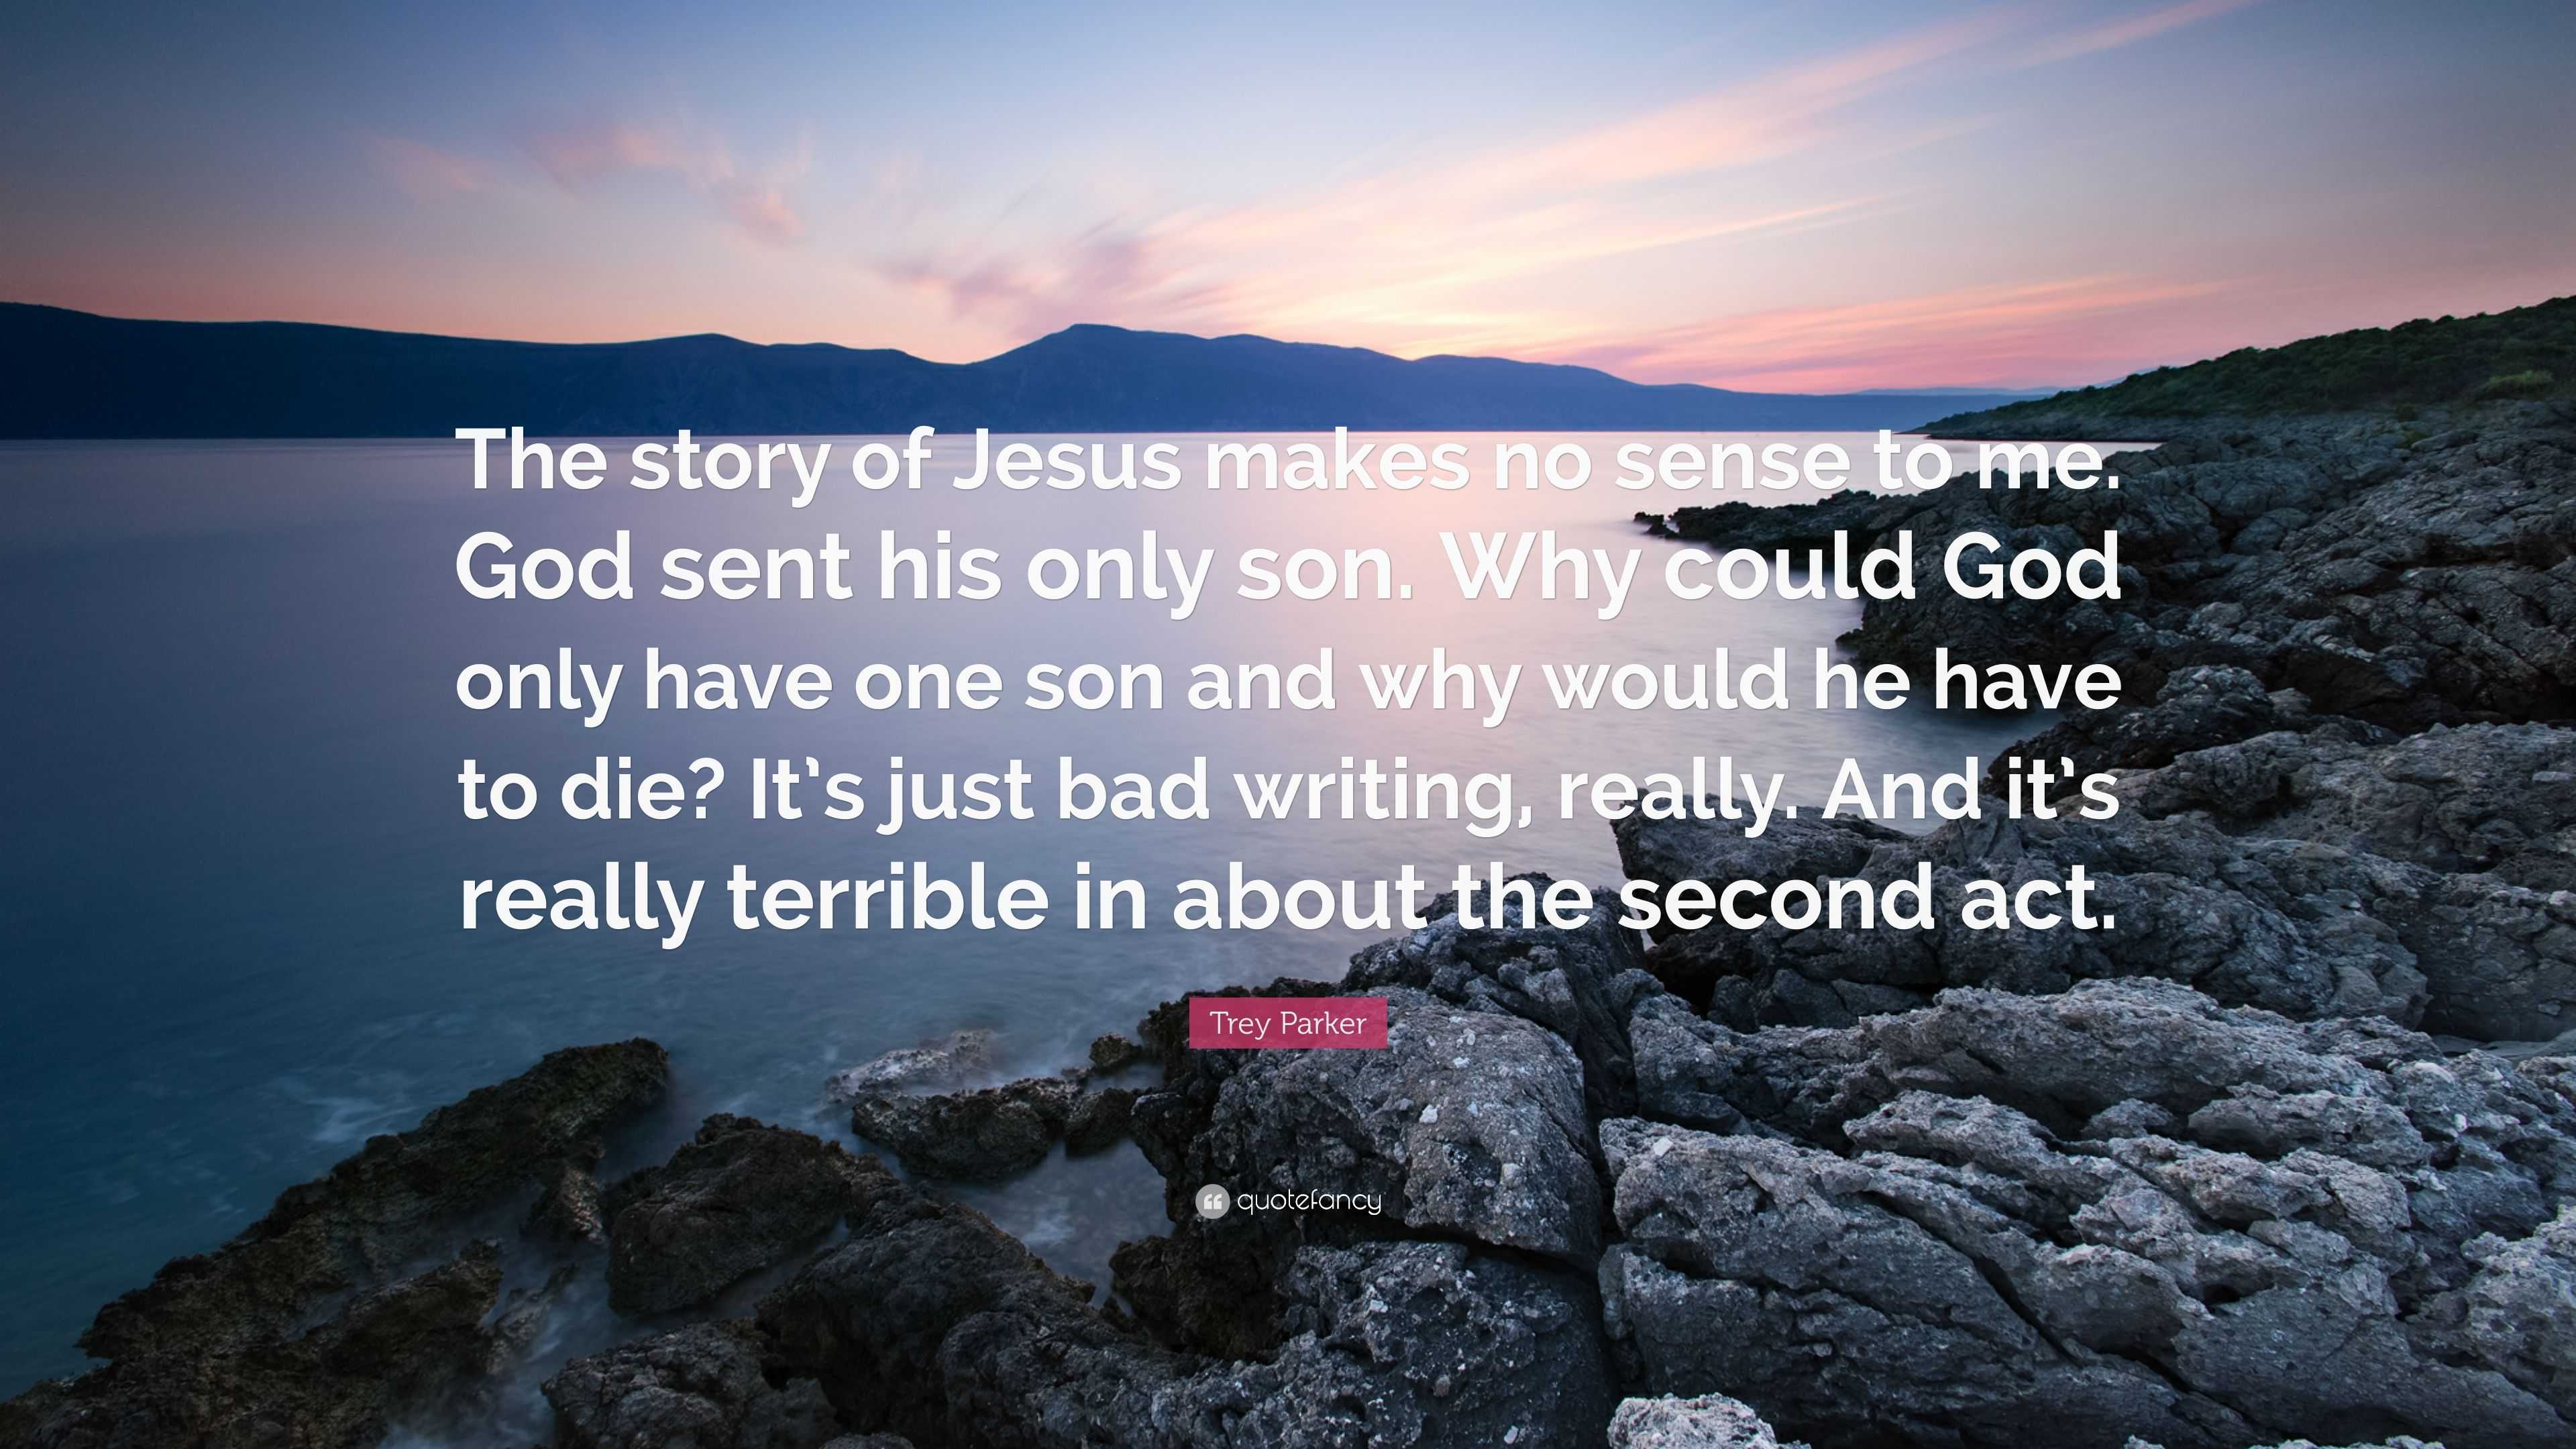 Trey Parker Quote: “The story of Jesus makes no sense to me. God